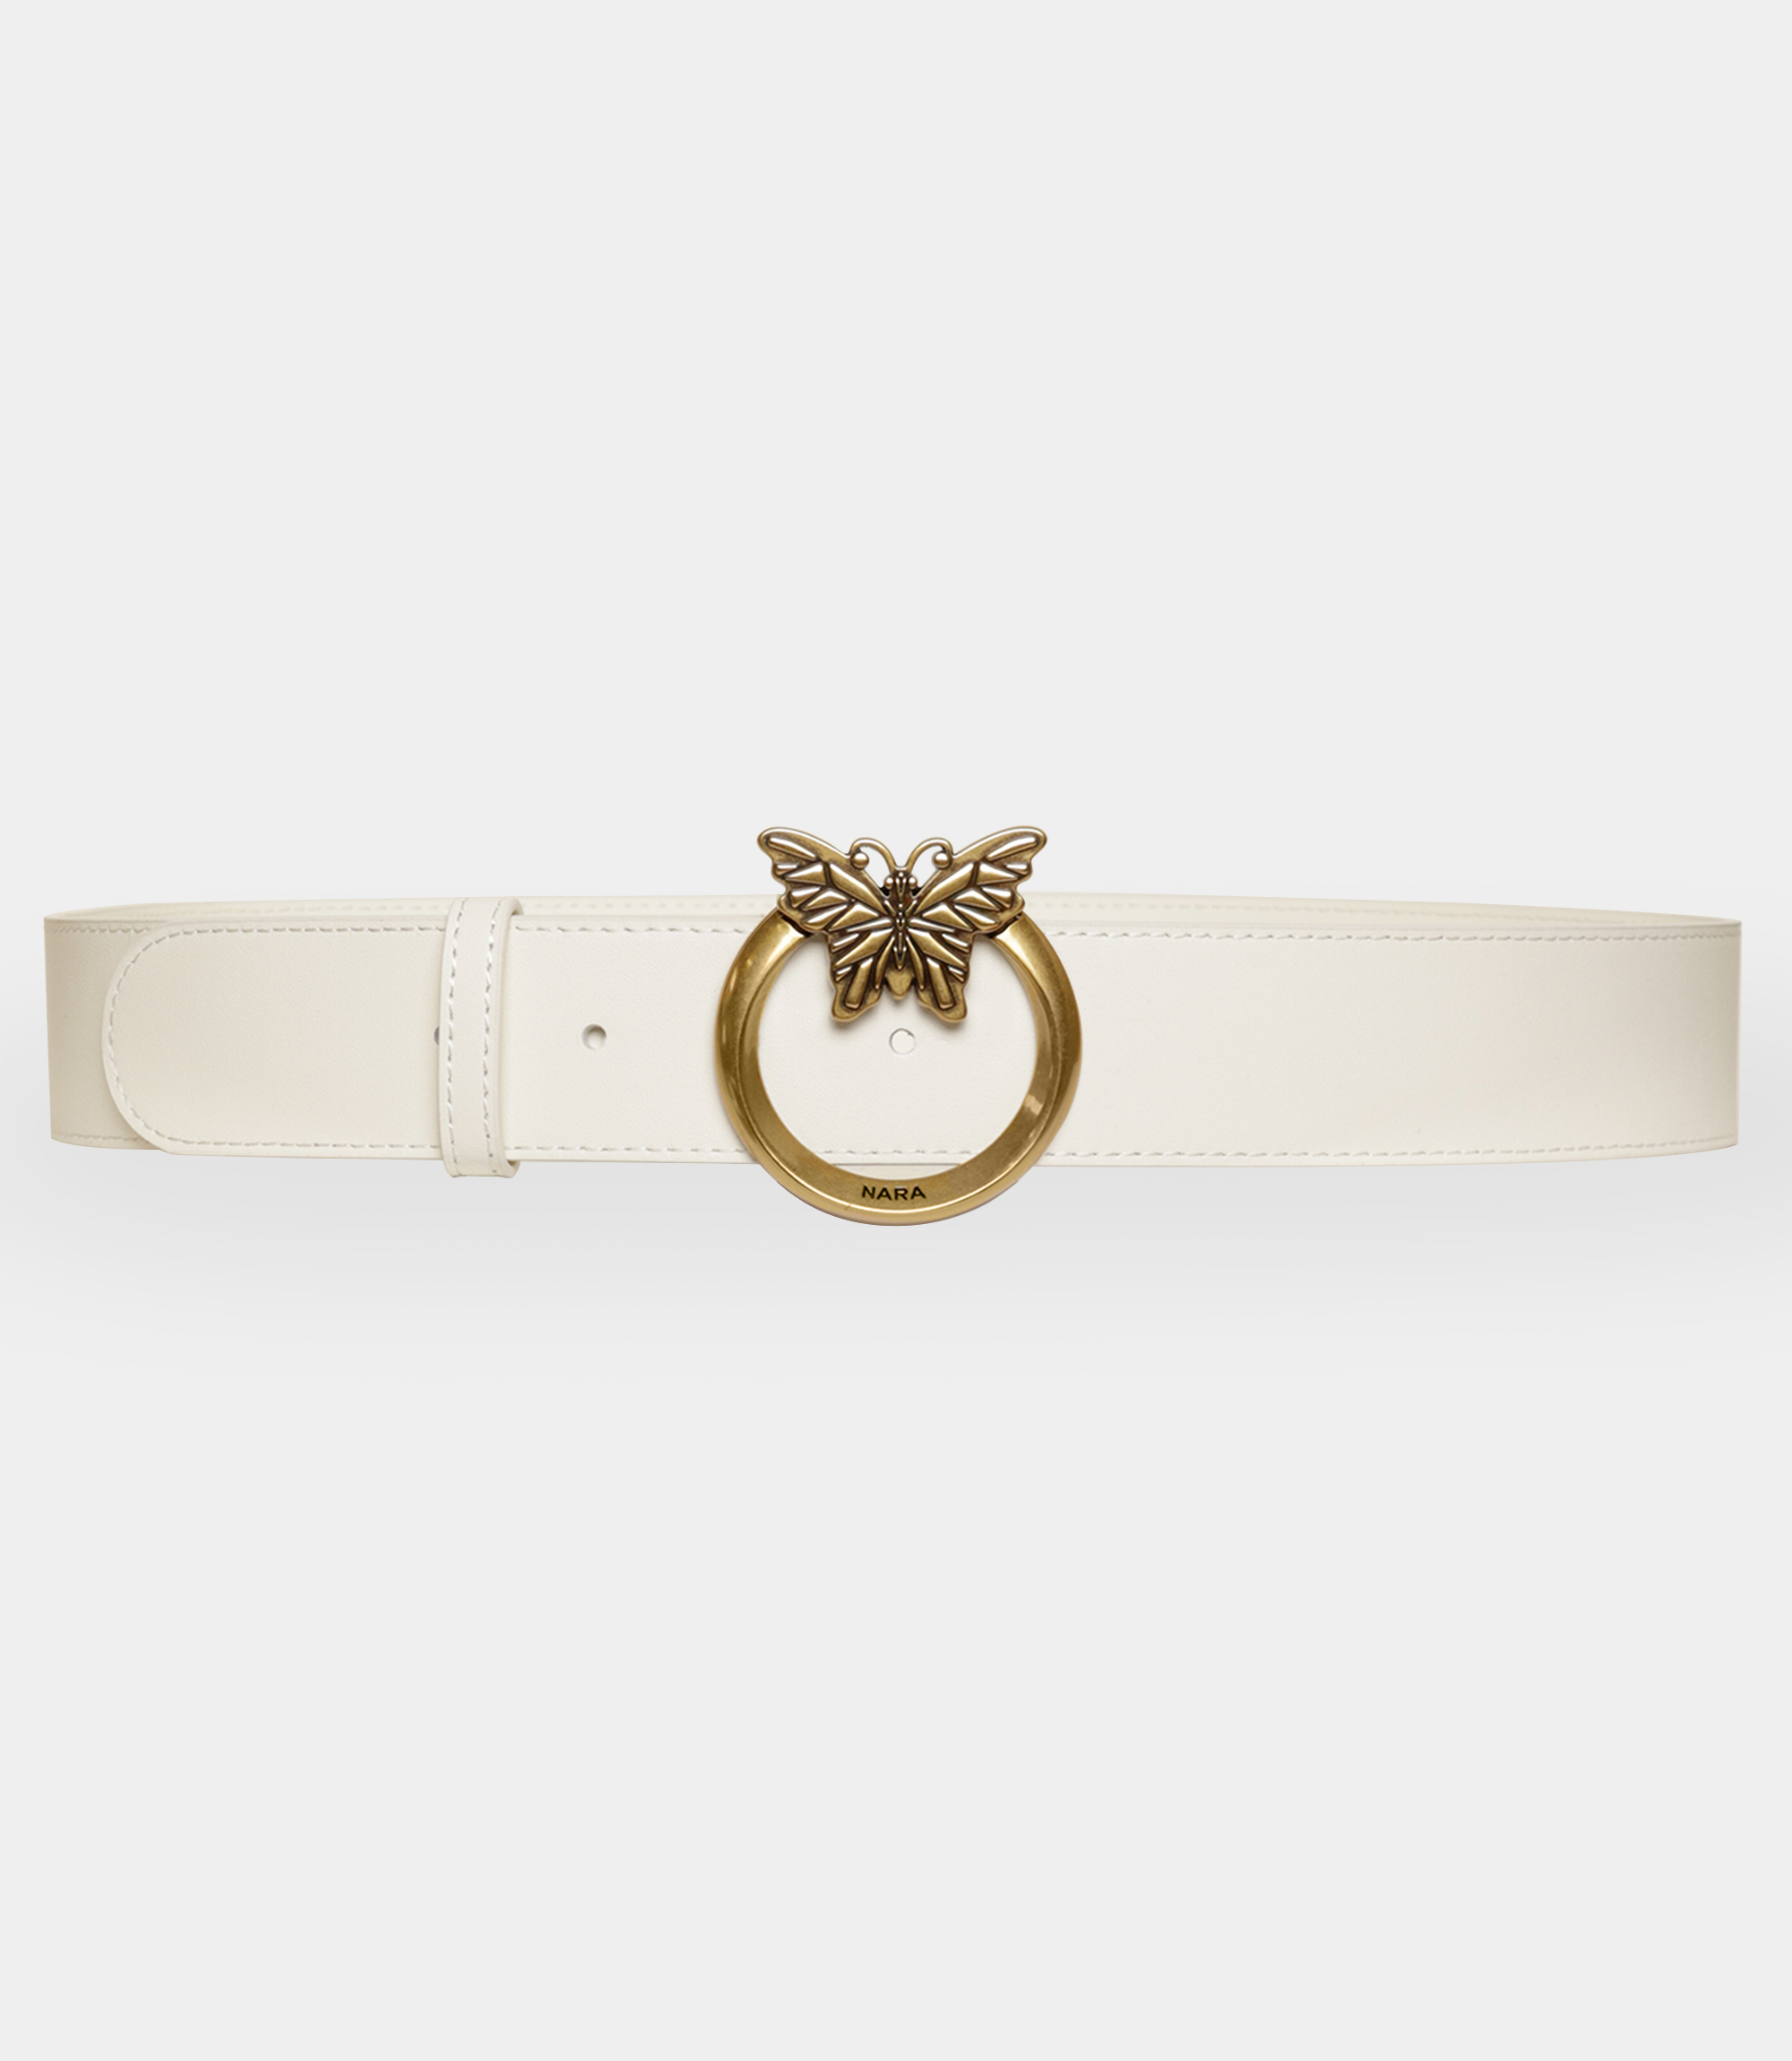 Leather belt with Nara logo - ACCESSORIES - NaraMilano